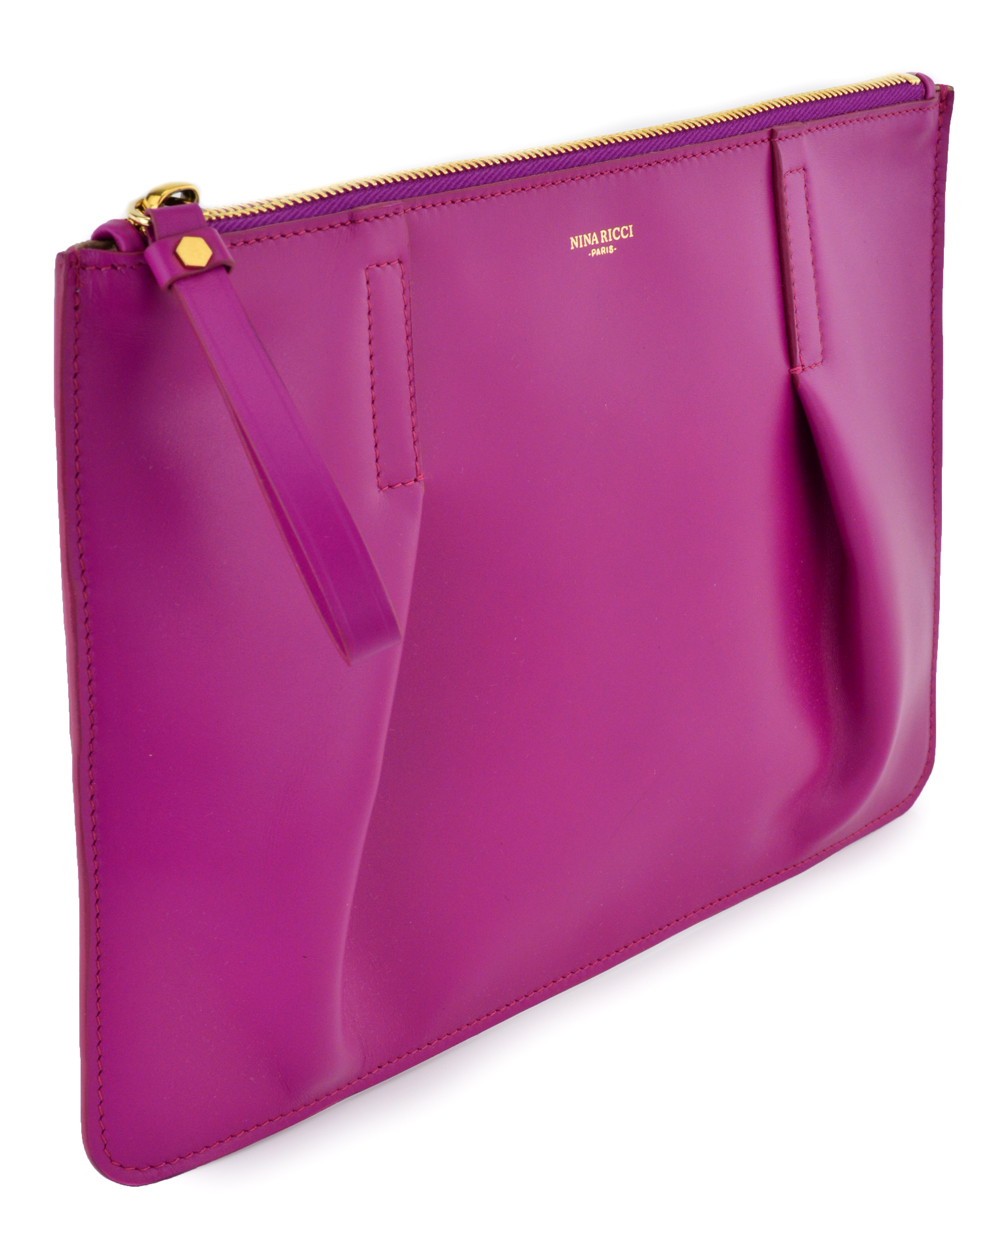 Nina Ricci Suede Fuchsia Large Clutch Bag in Purple - Lyst